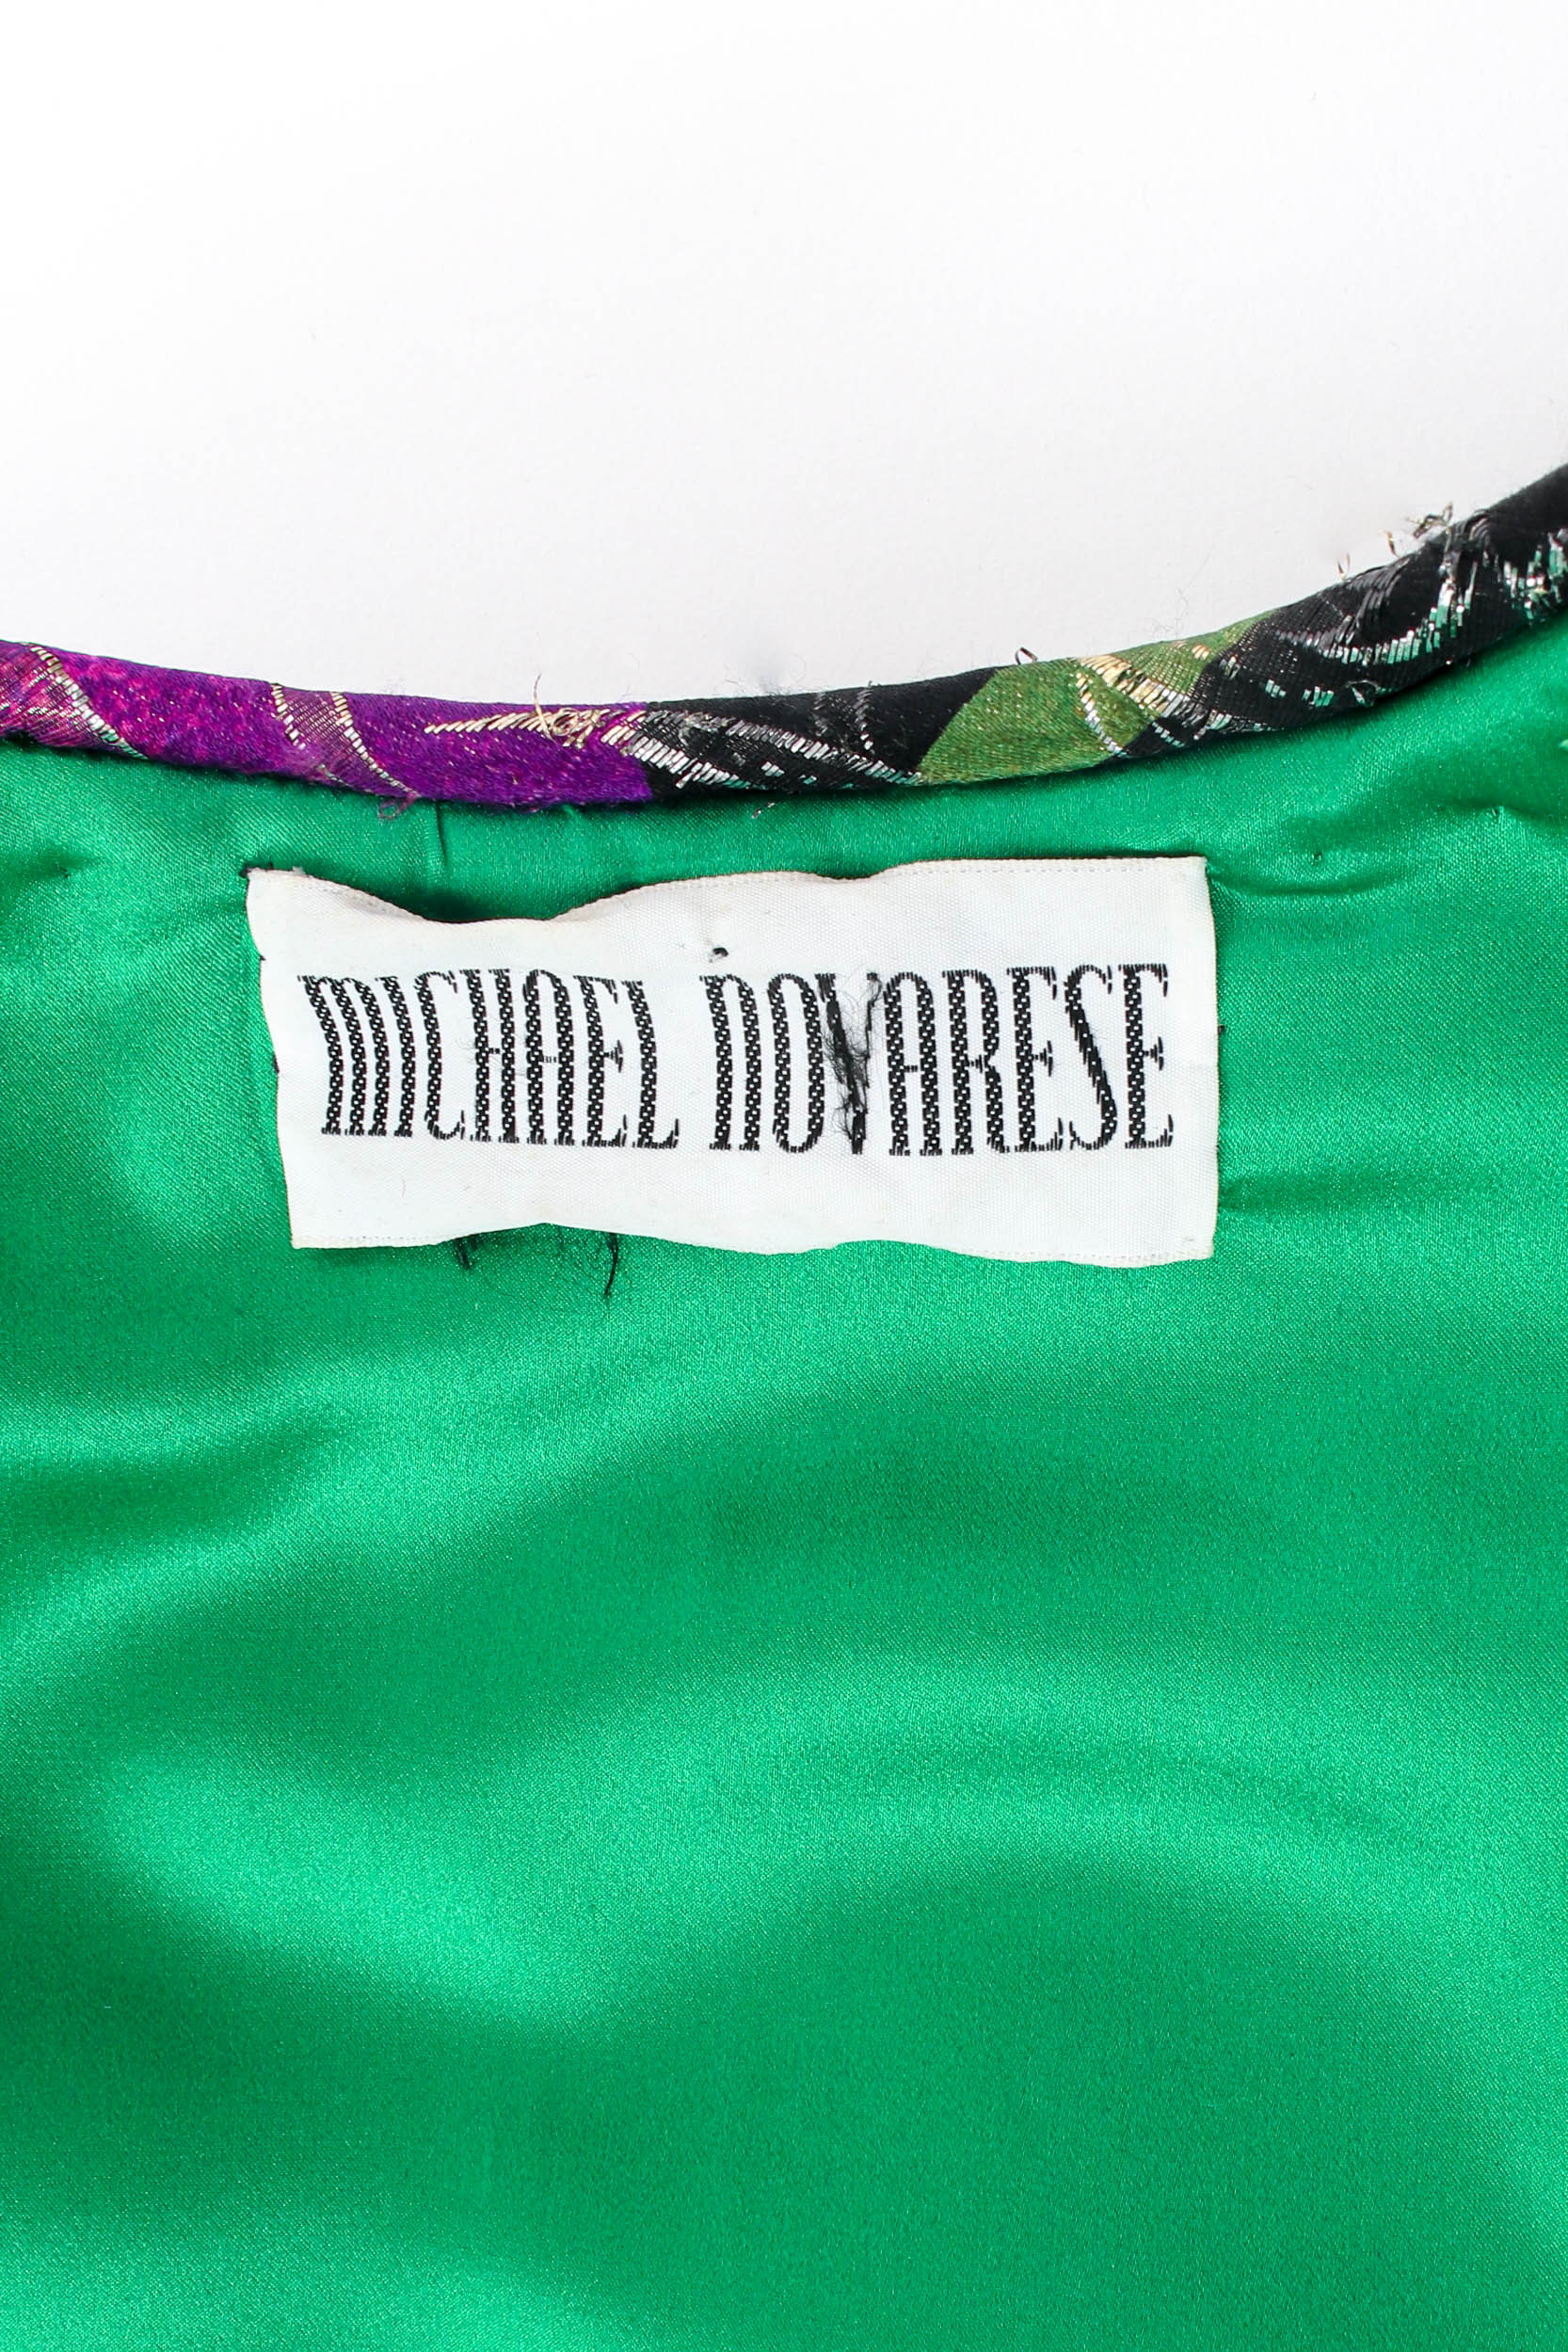 Vintage Michael Novarese Fleur Metallic Jacket signature label closeup @recessla